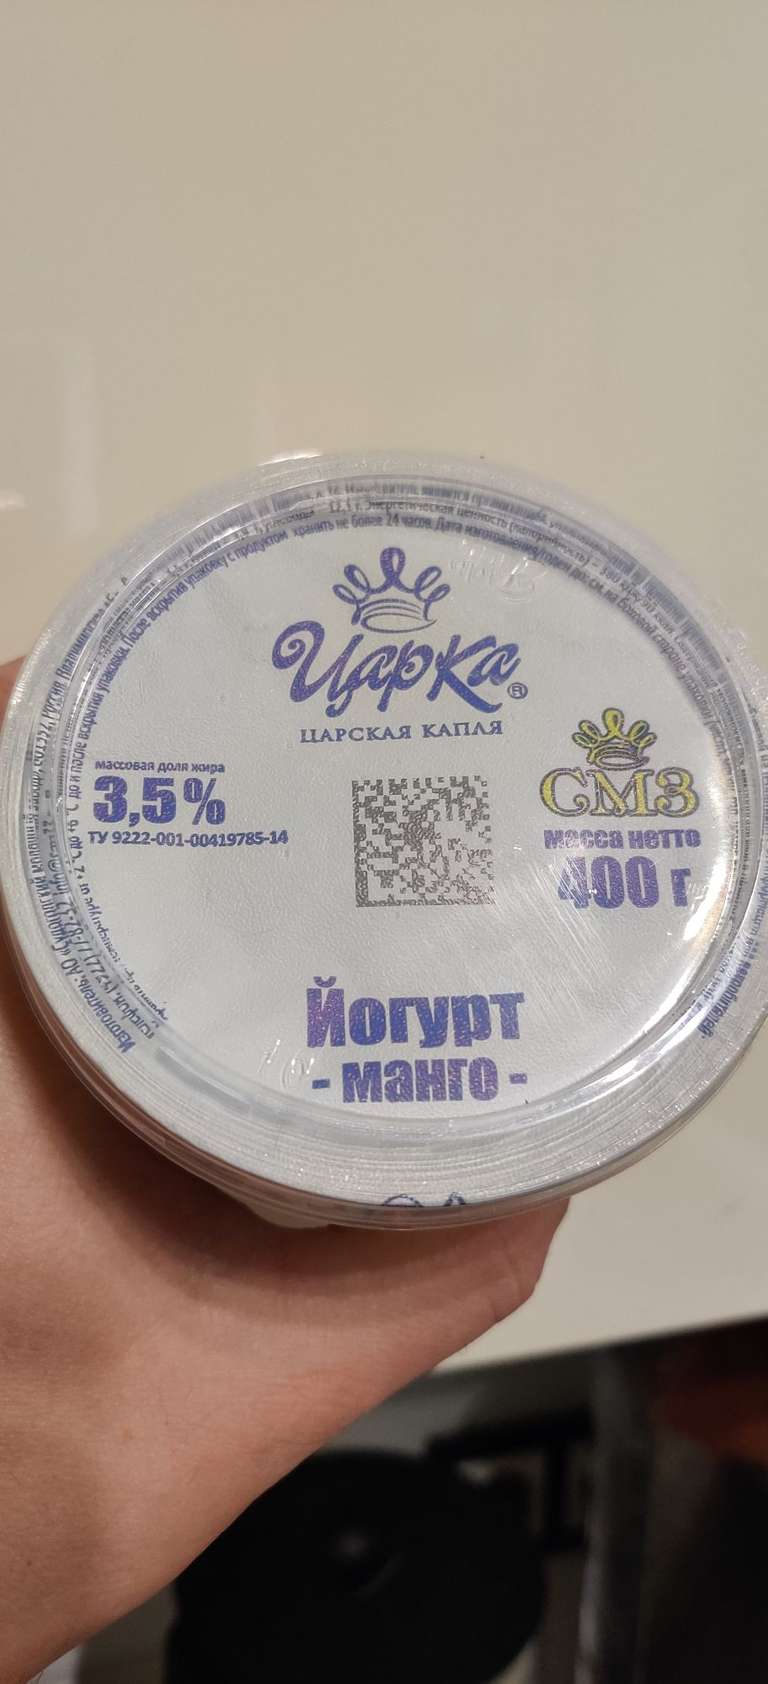 [Мск] Йогурт Царка 400 гр.